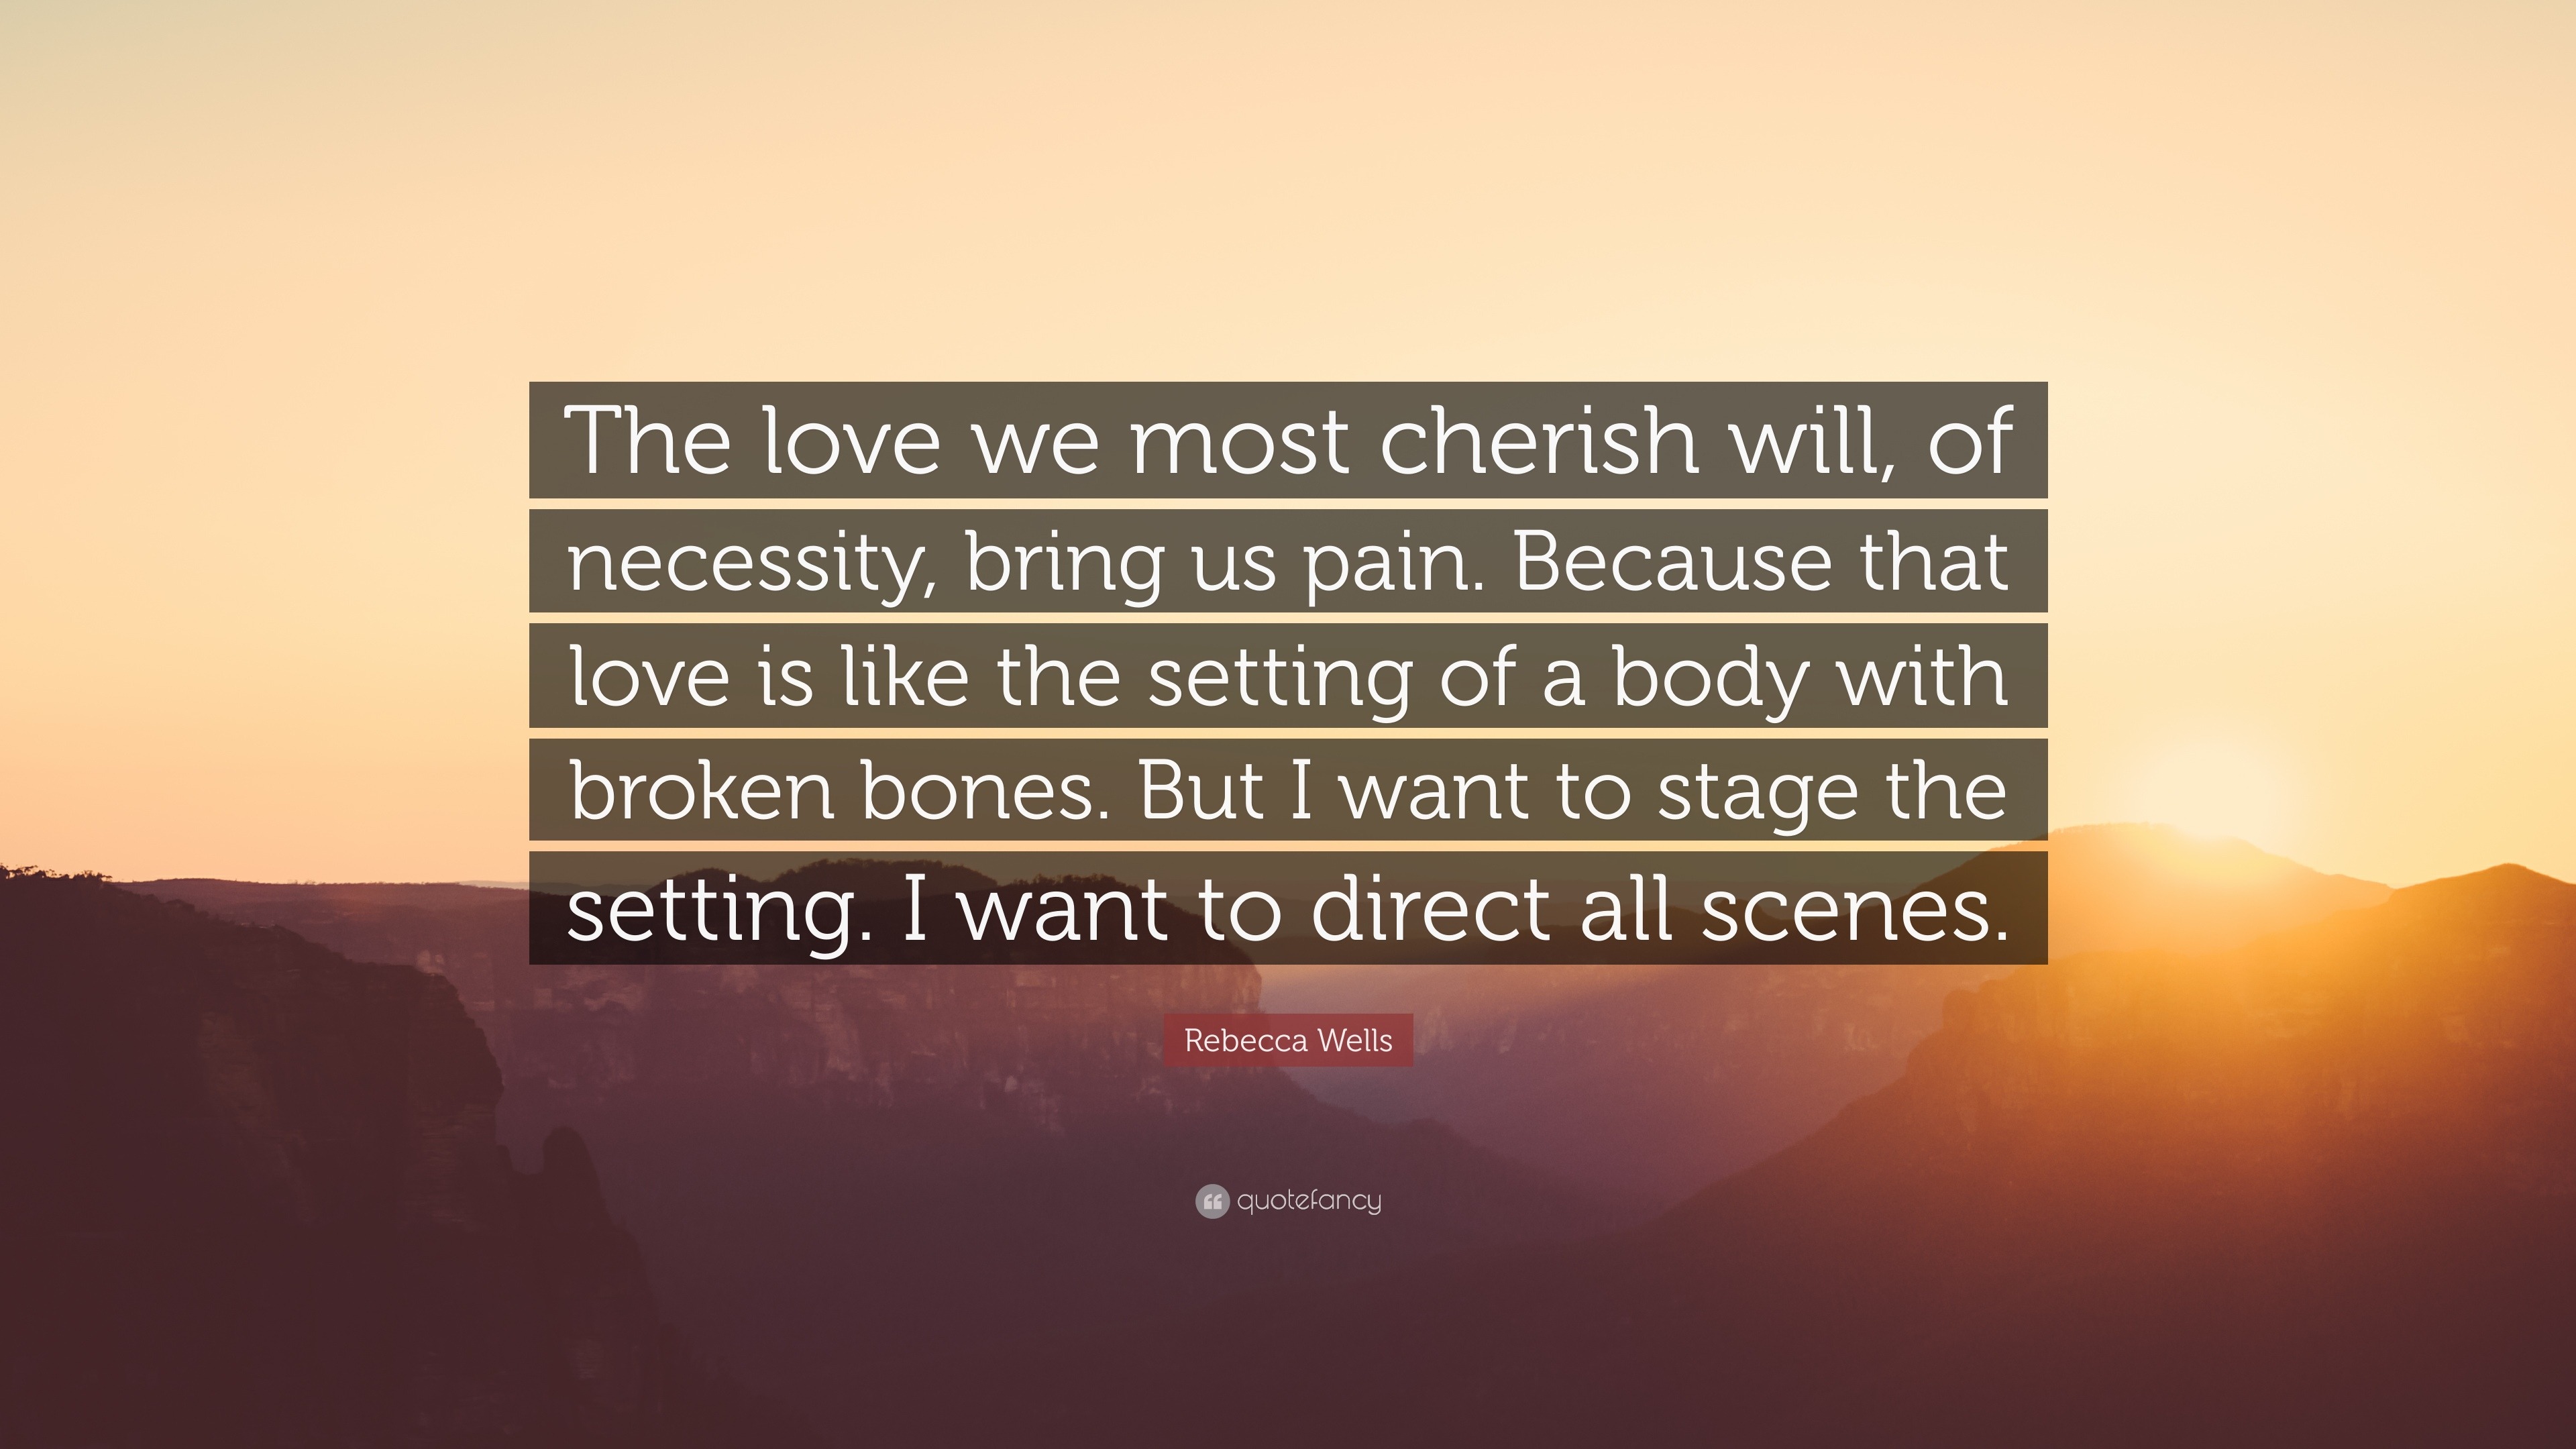 Rebecca Wells Quote: “The love we most cherish will, of necessity